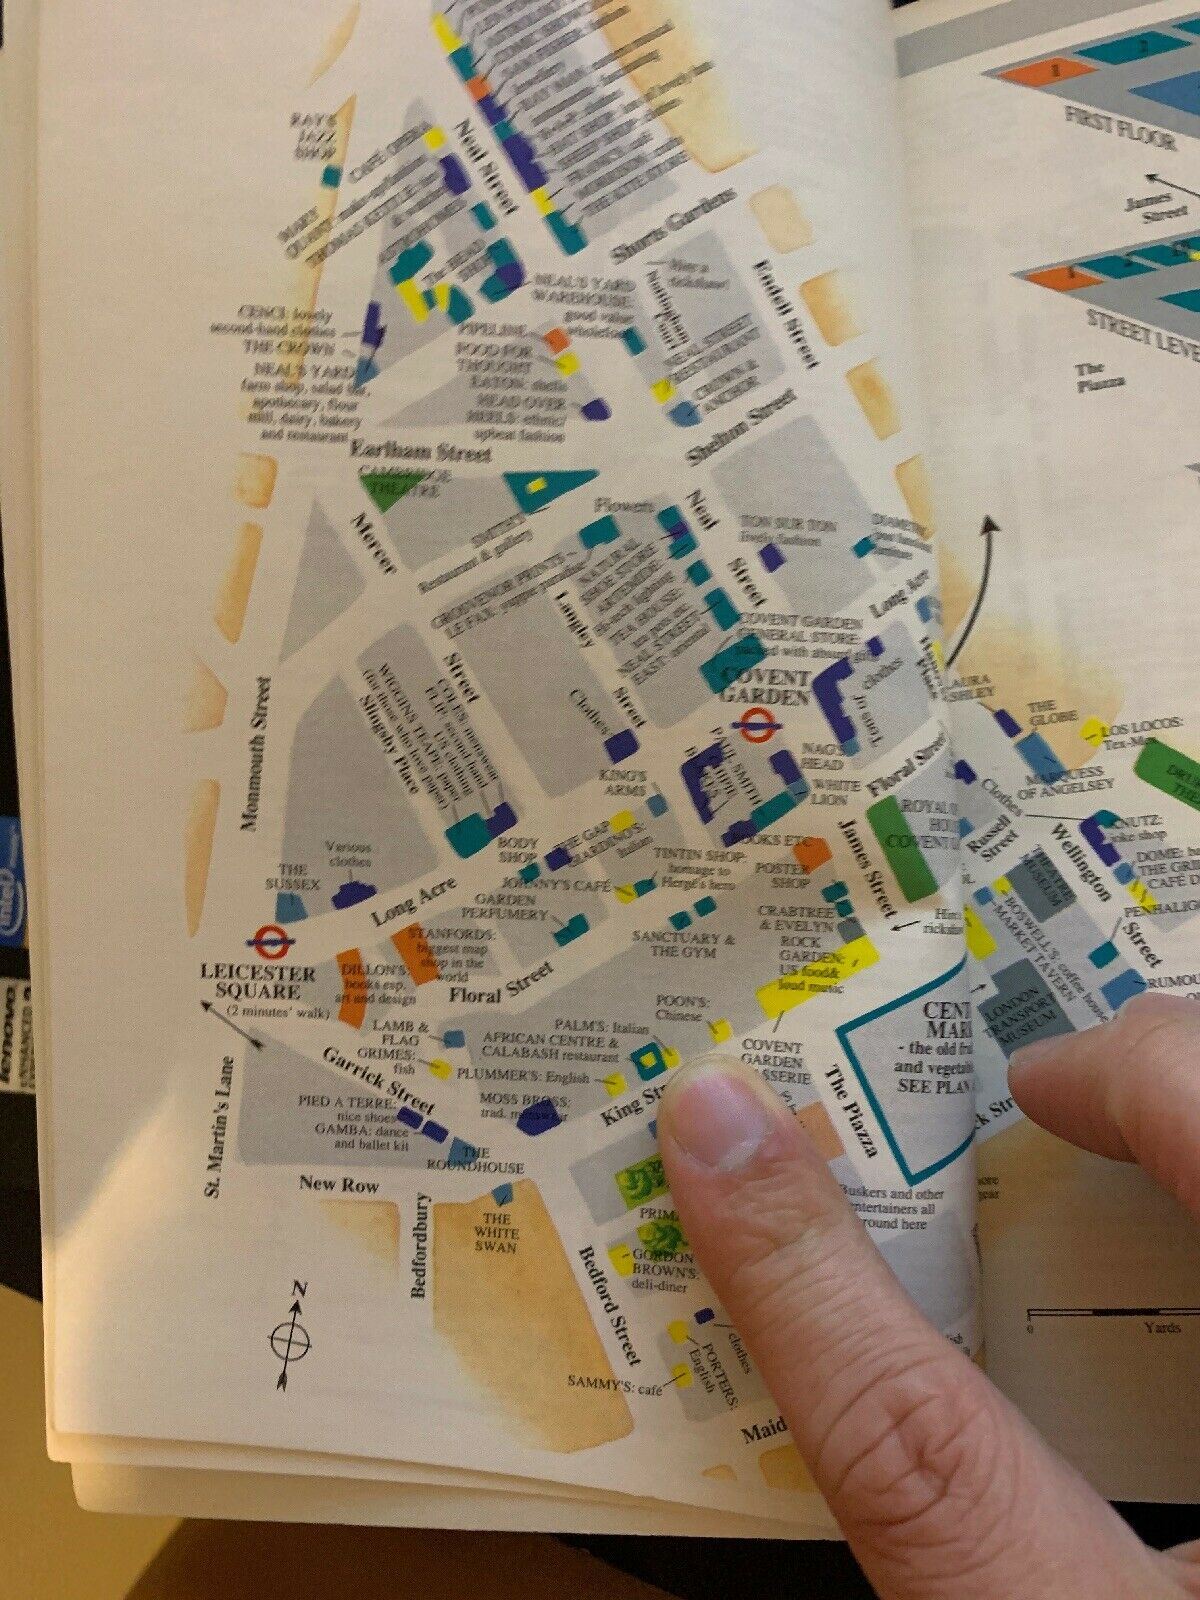 Nicholson London Illustrated Atlas 1992